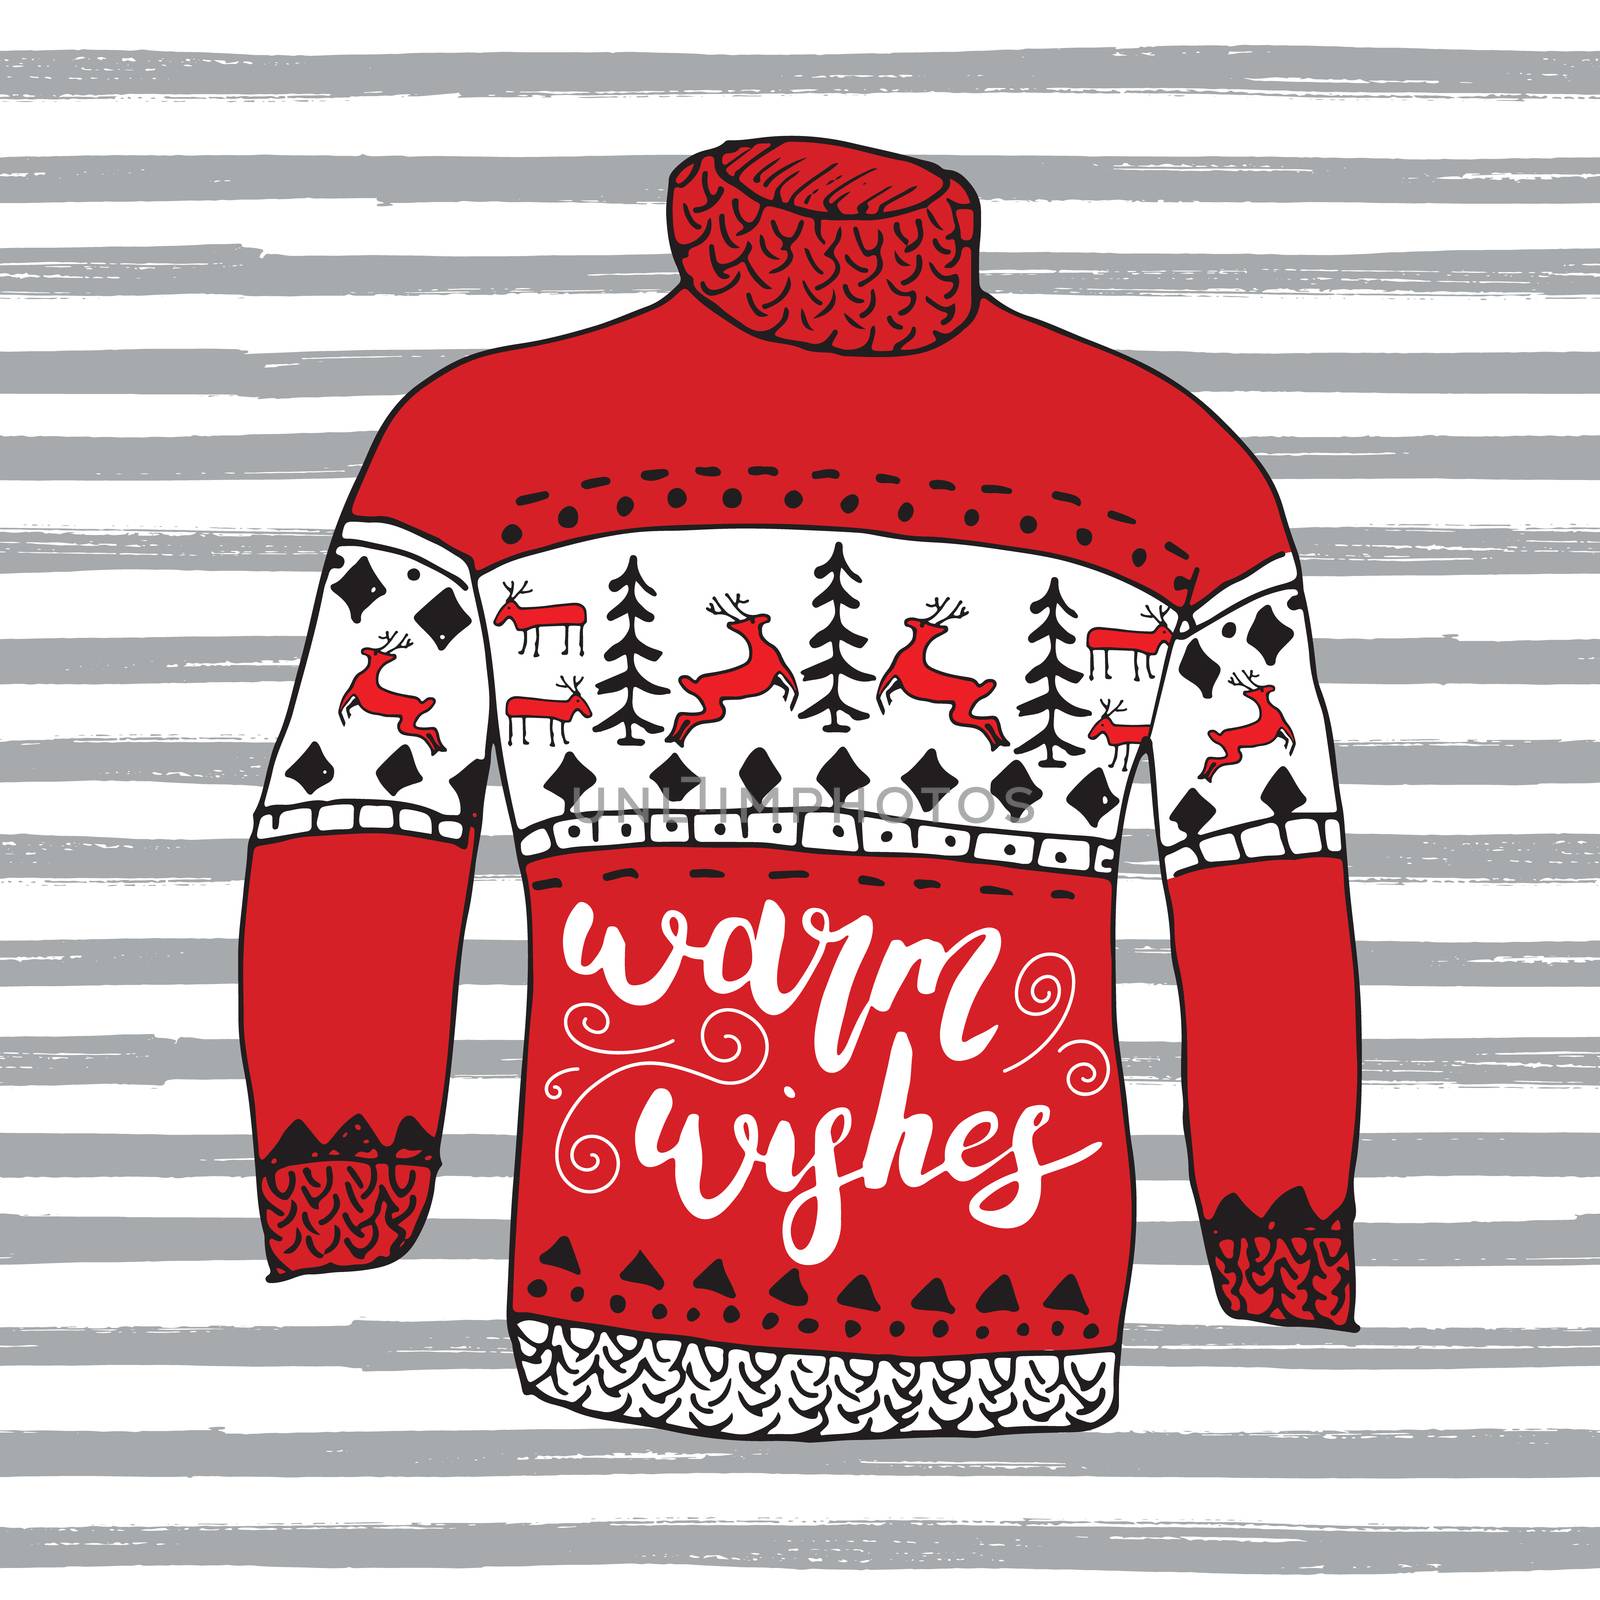 Winter season lettering warm wishes on Hand drawn warm reindeer sweater sketch. Vector illustration